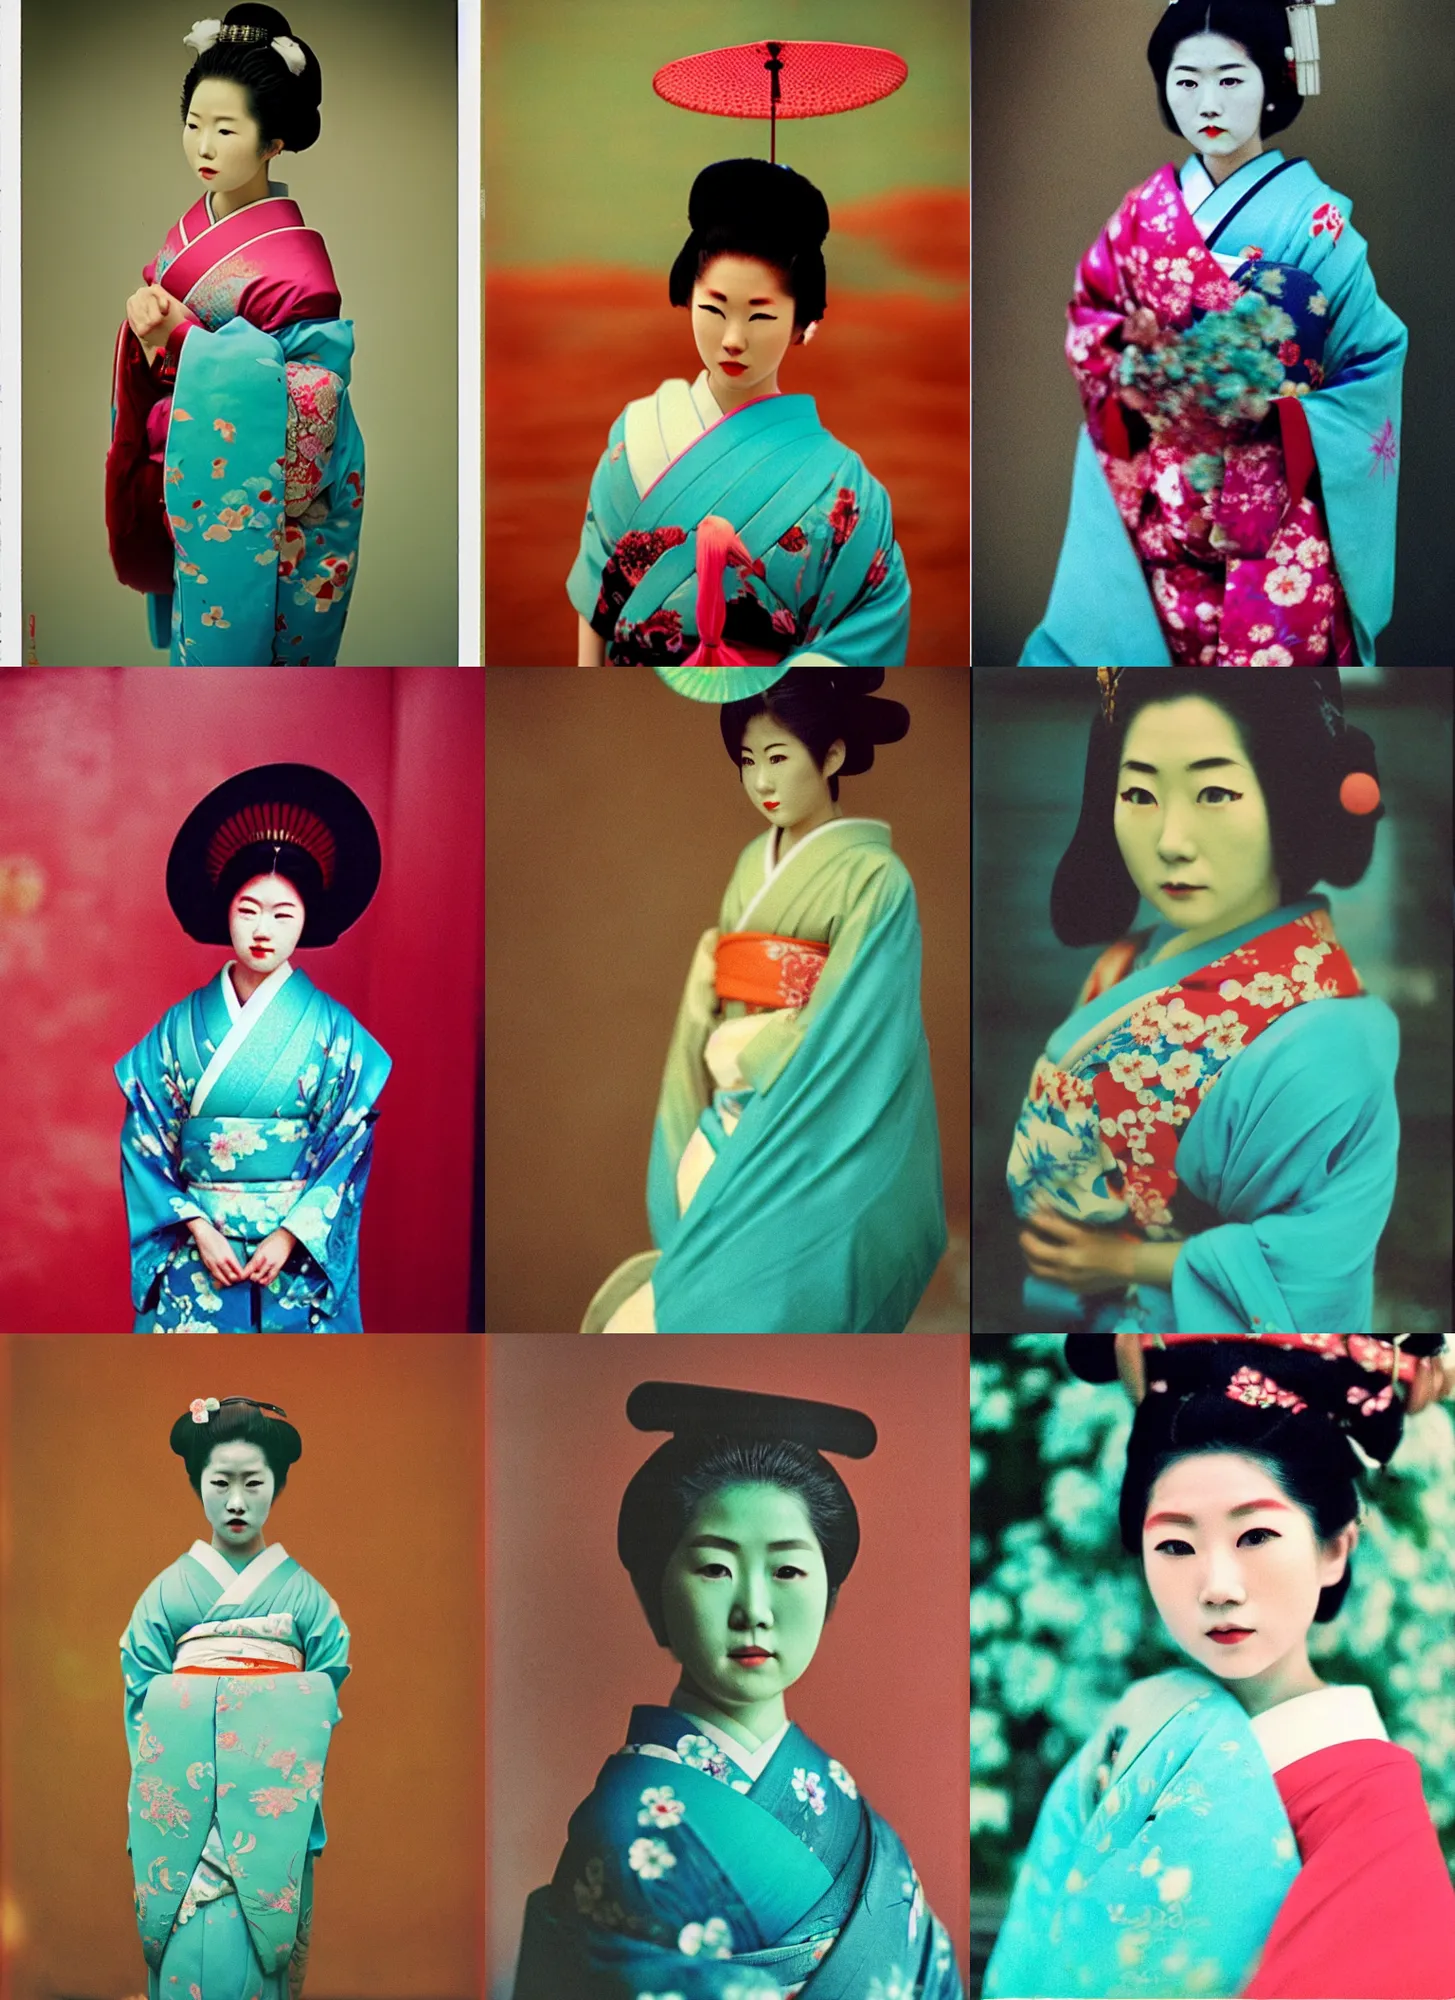 Prompt: Portrait Photograph of a Japanese Geisha Lomochrome Turquoise 100-400